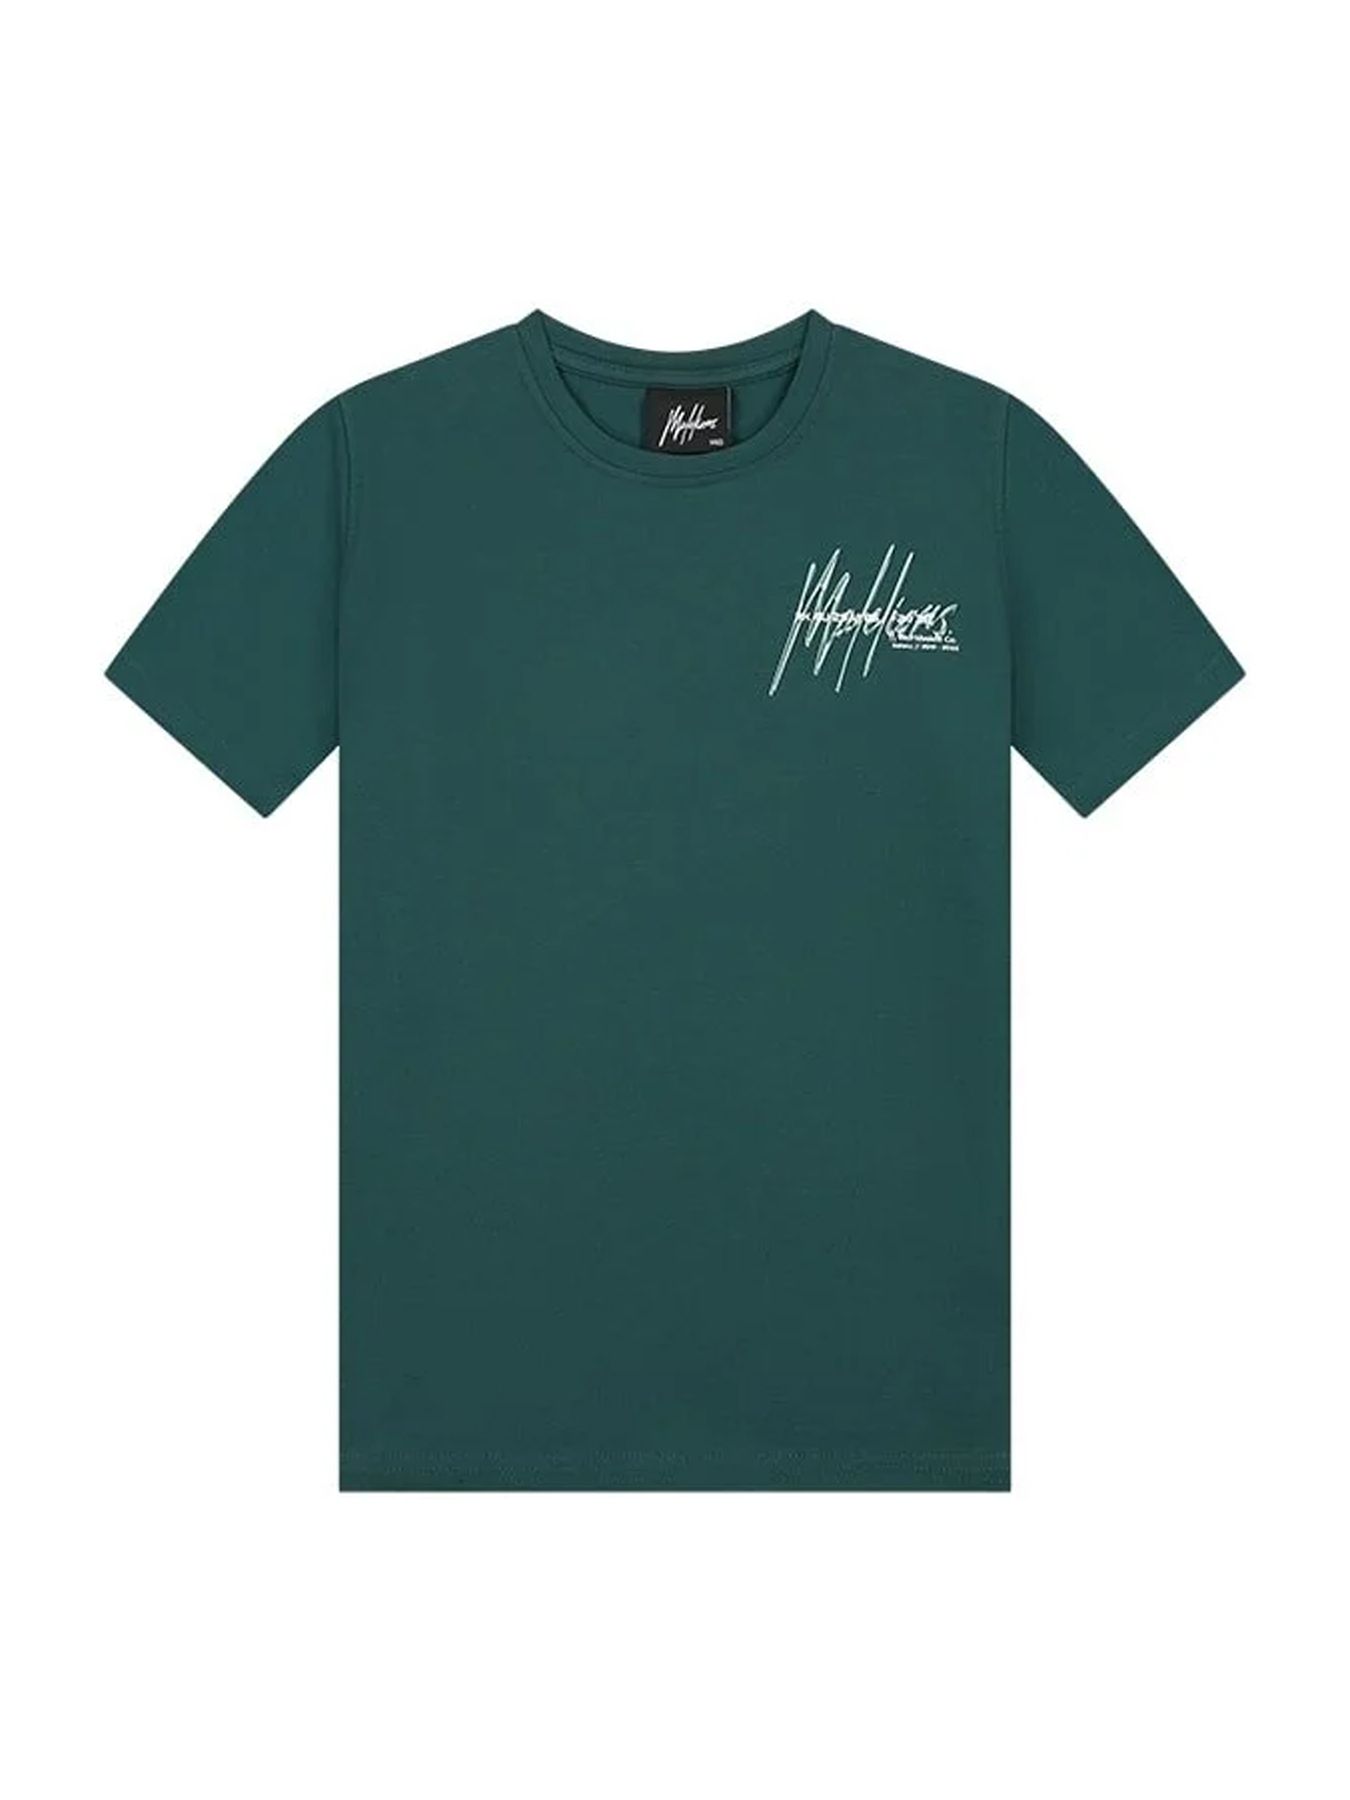 Malelions Junior space t-shirt Dark Green/mint 2900146463098